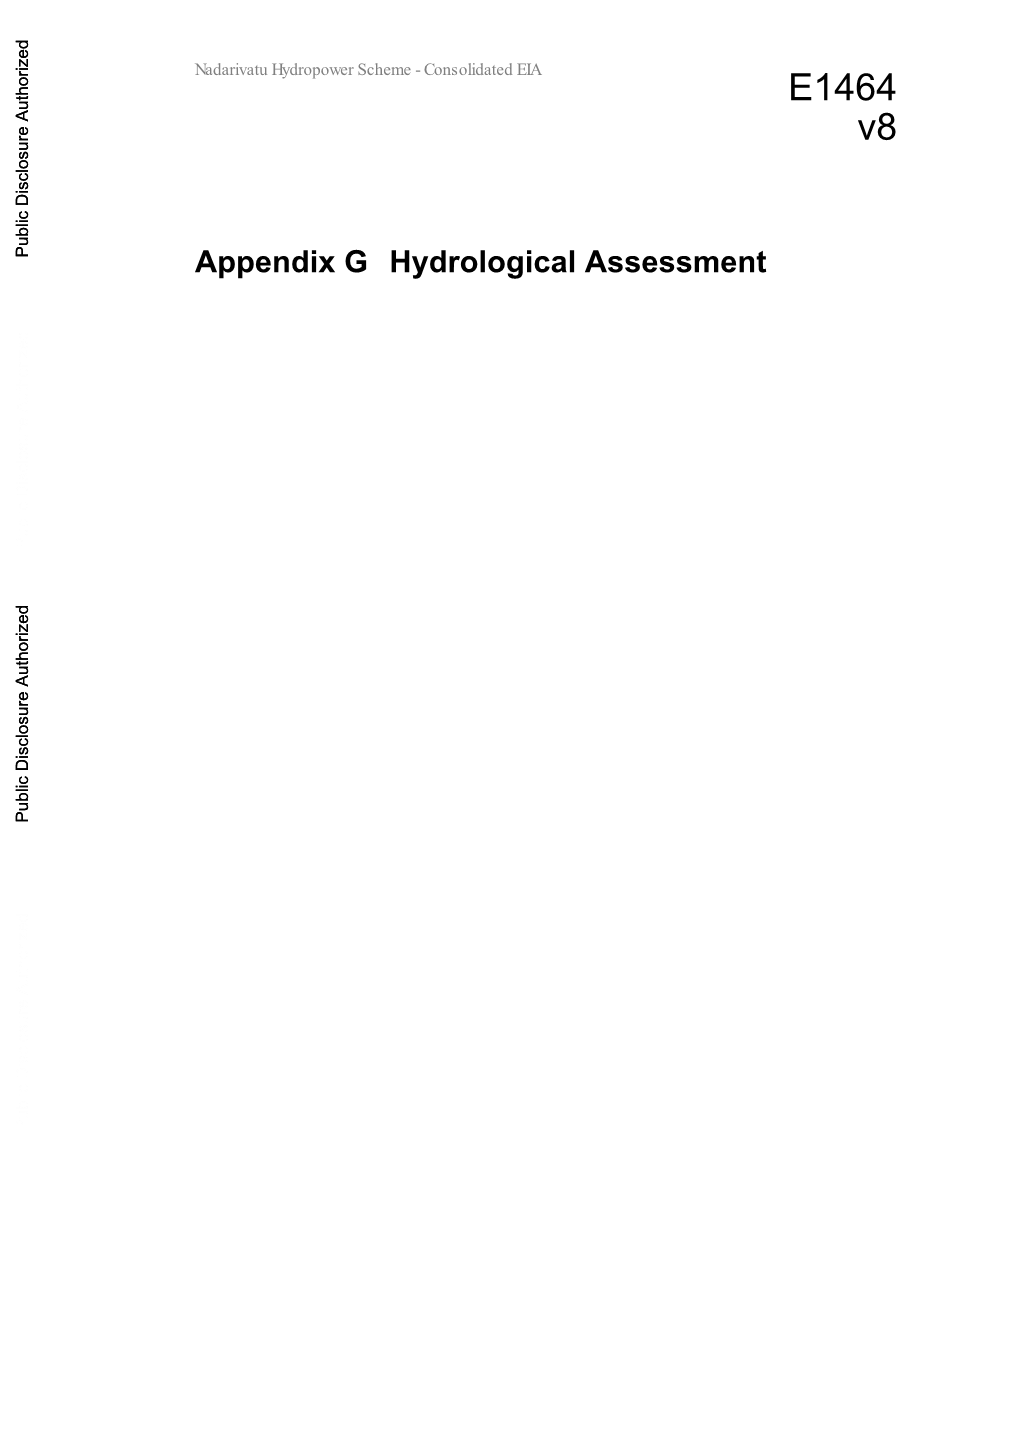 Appendix G Hydrological Assessment Public Disclosure Authorized Public Disclosure Authorized Public Disclosure Authorized